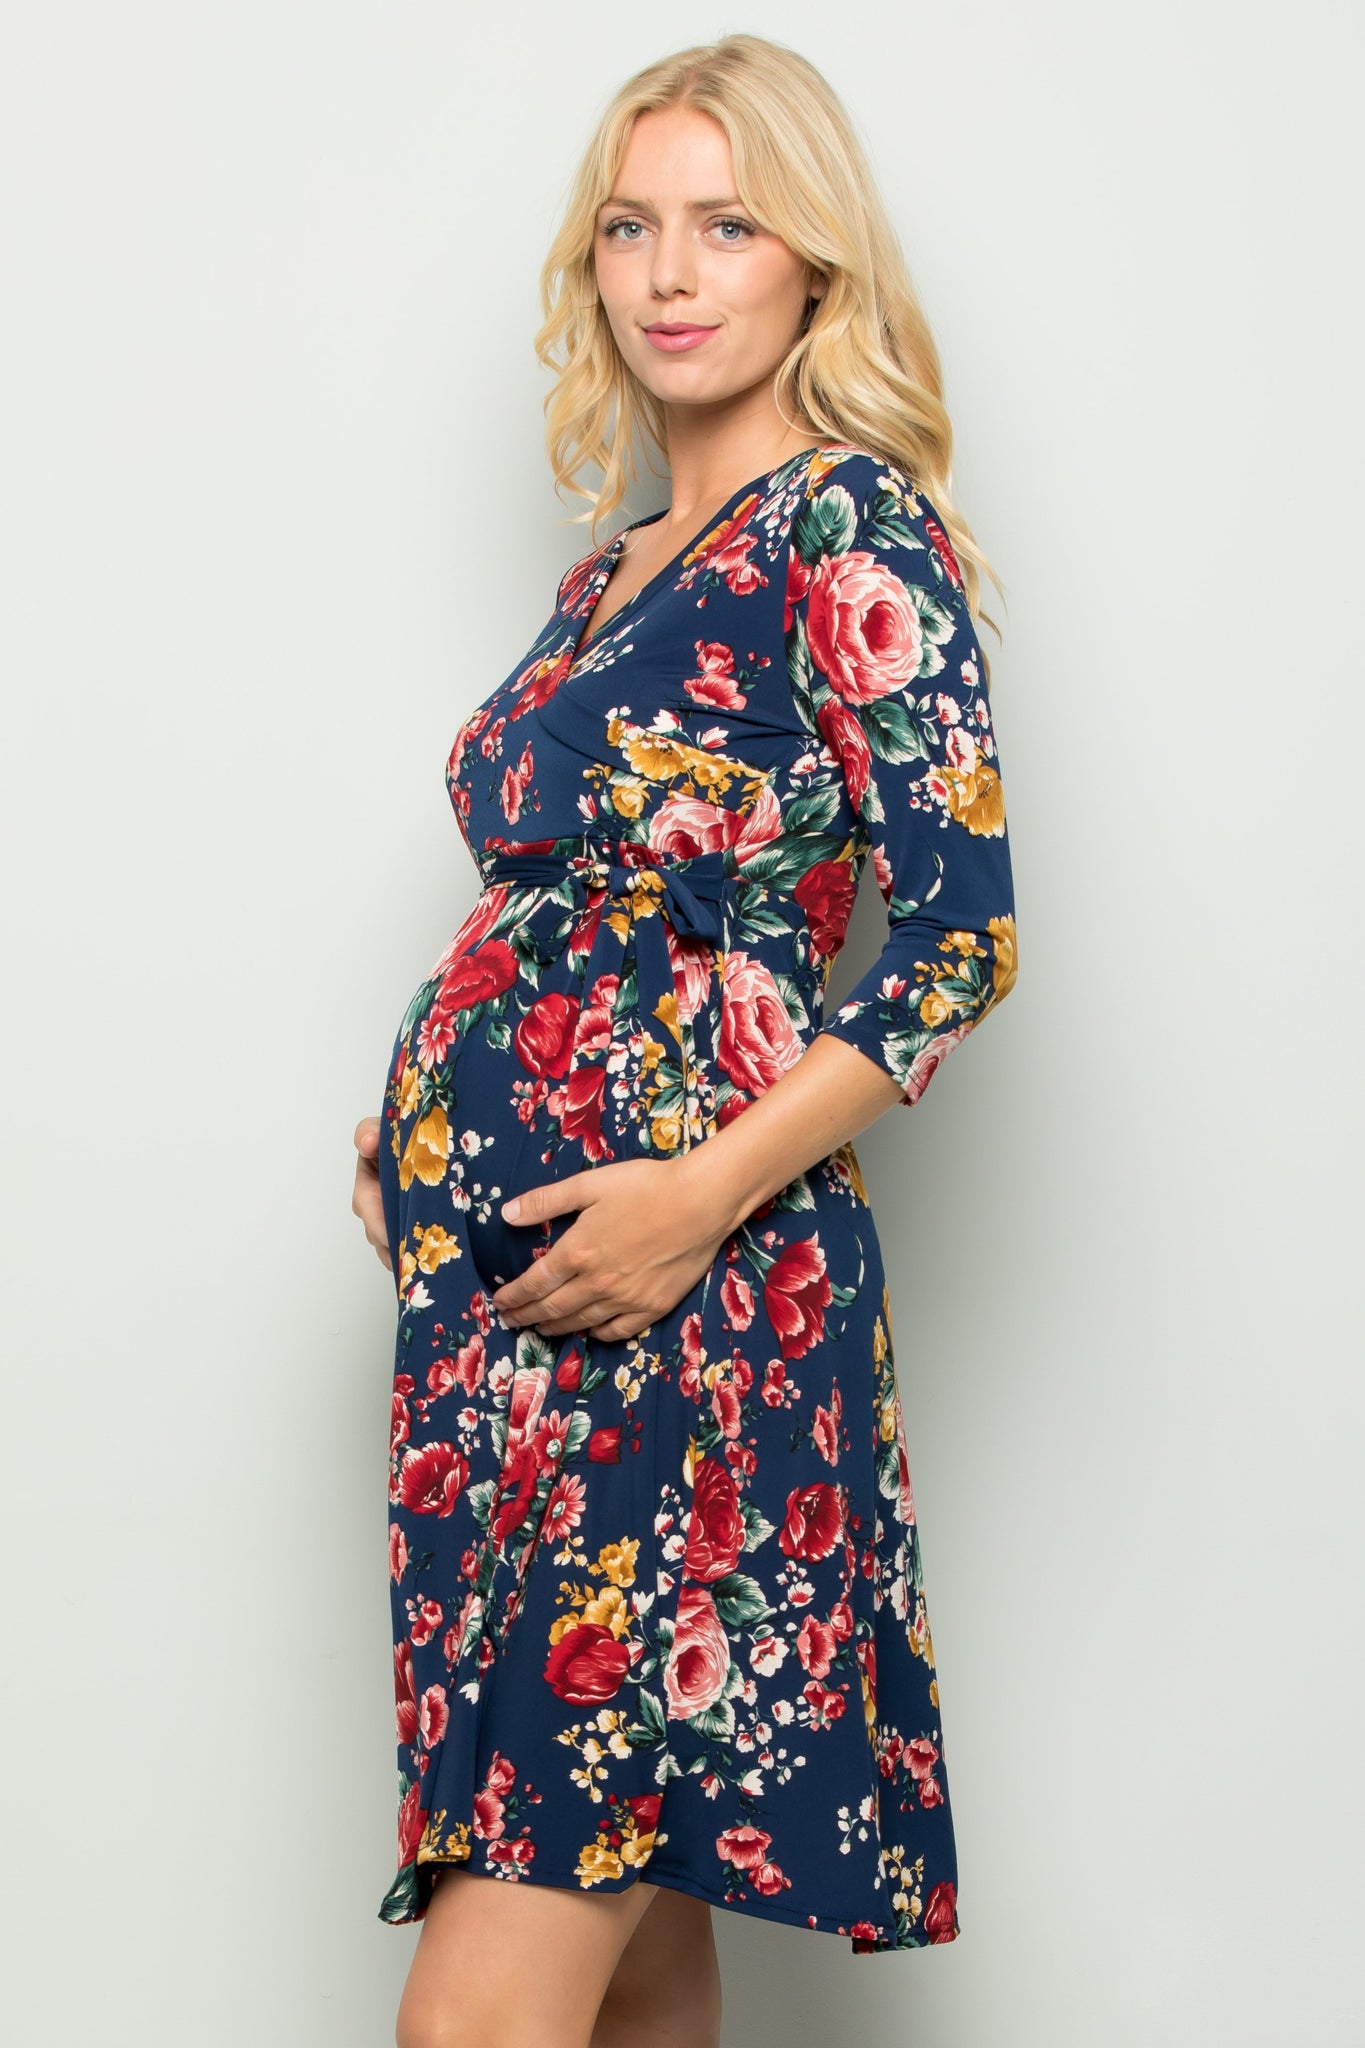 maternity pregnancy baby shower floral fit flare quarter sleeve surplice spring summer cocktail dress